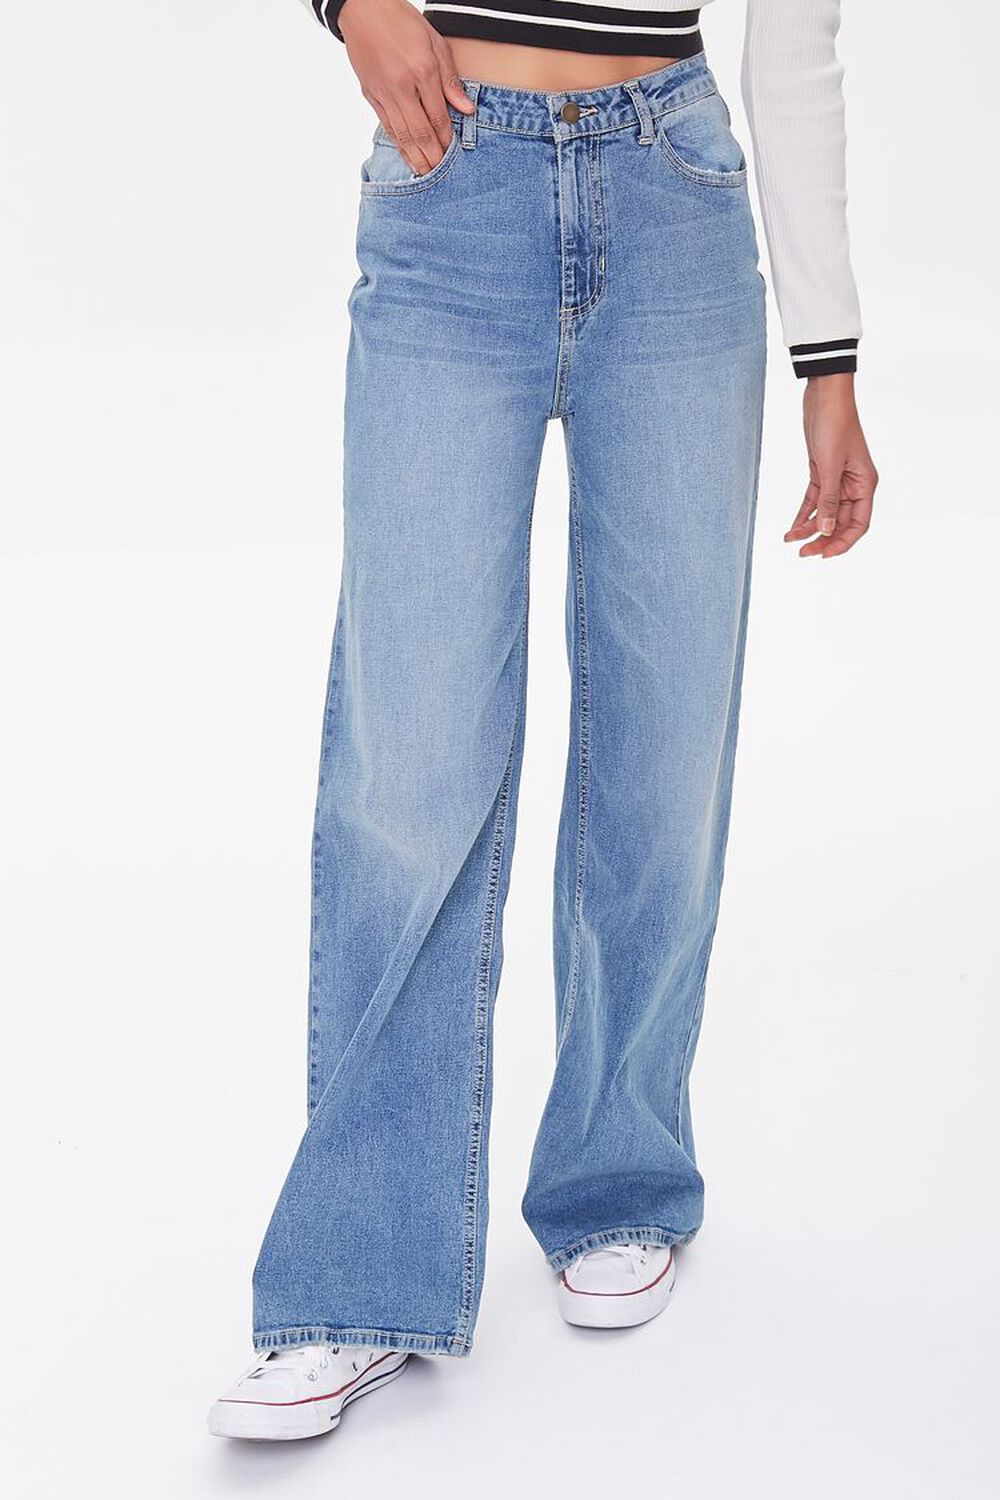 MEDIUM DENIM High-Rise Straight Jeans, image 2